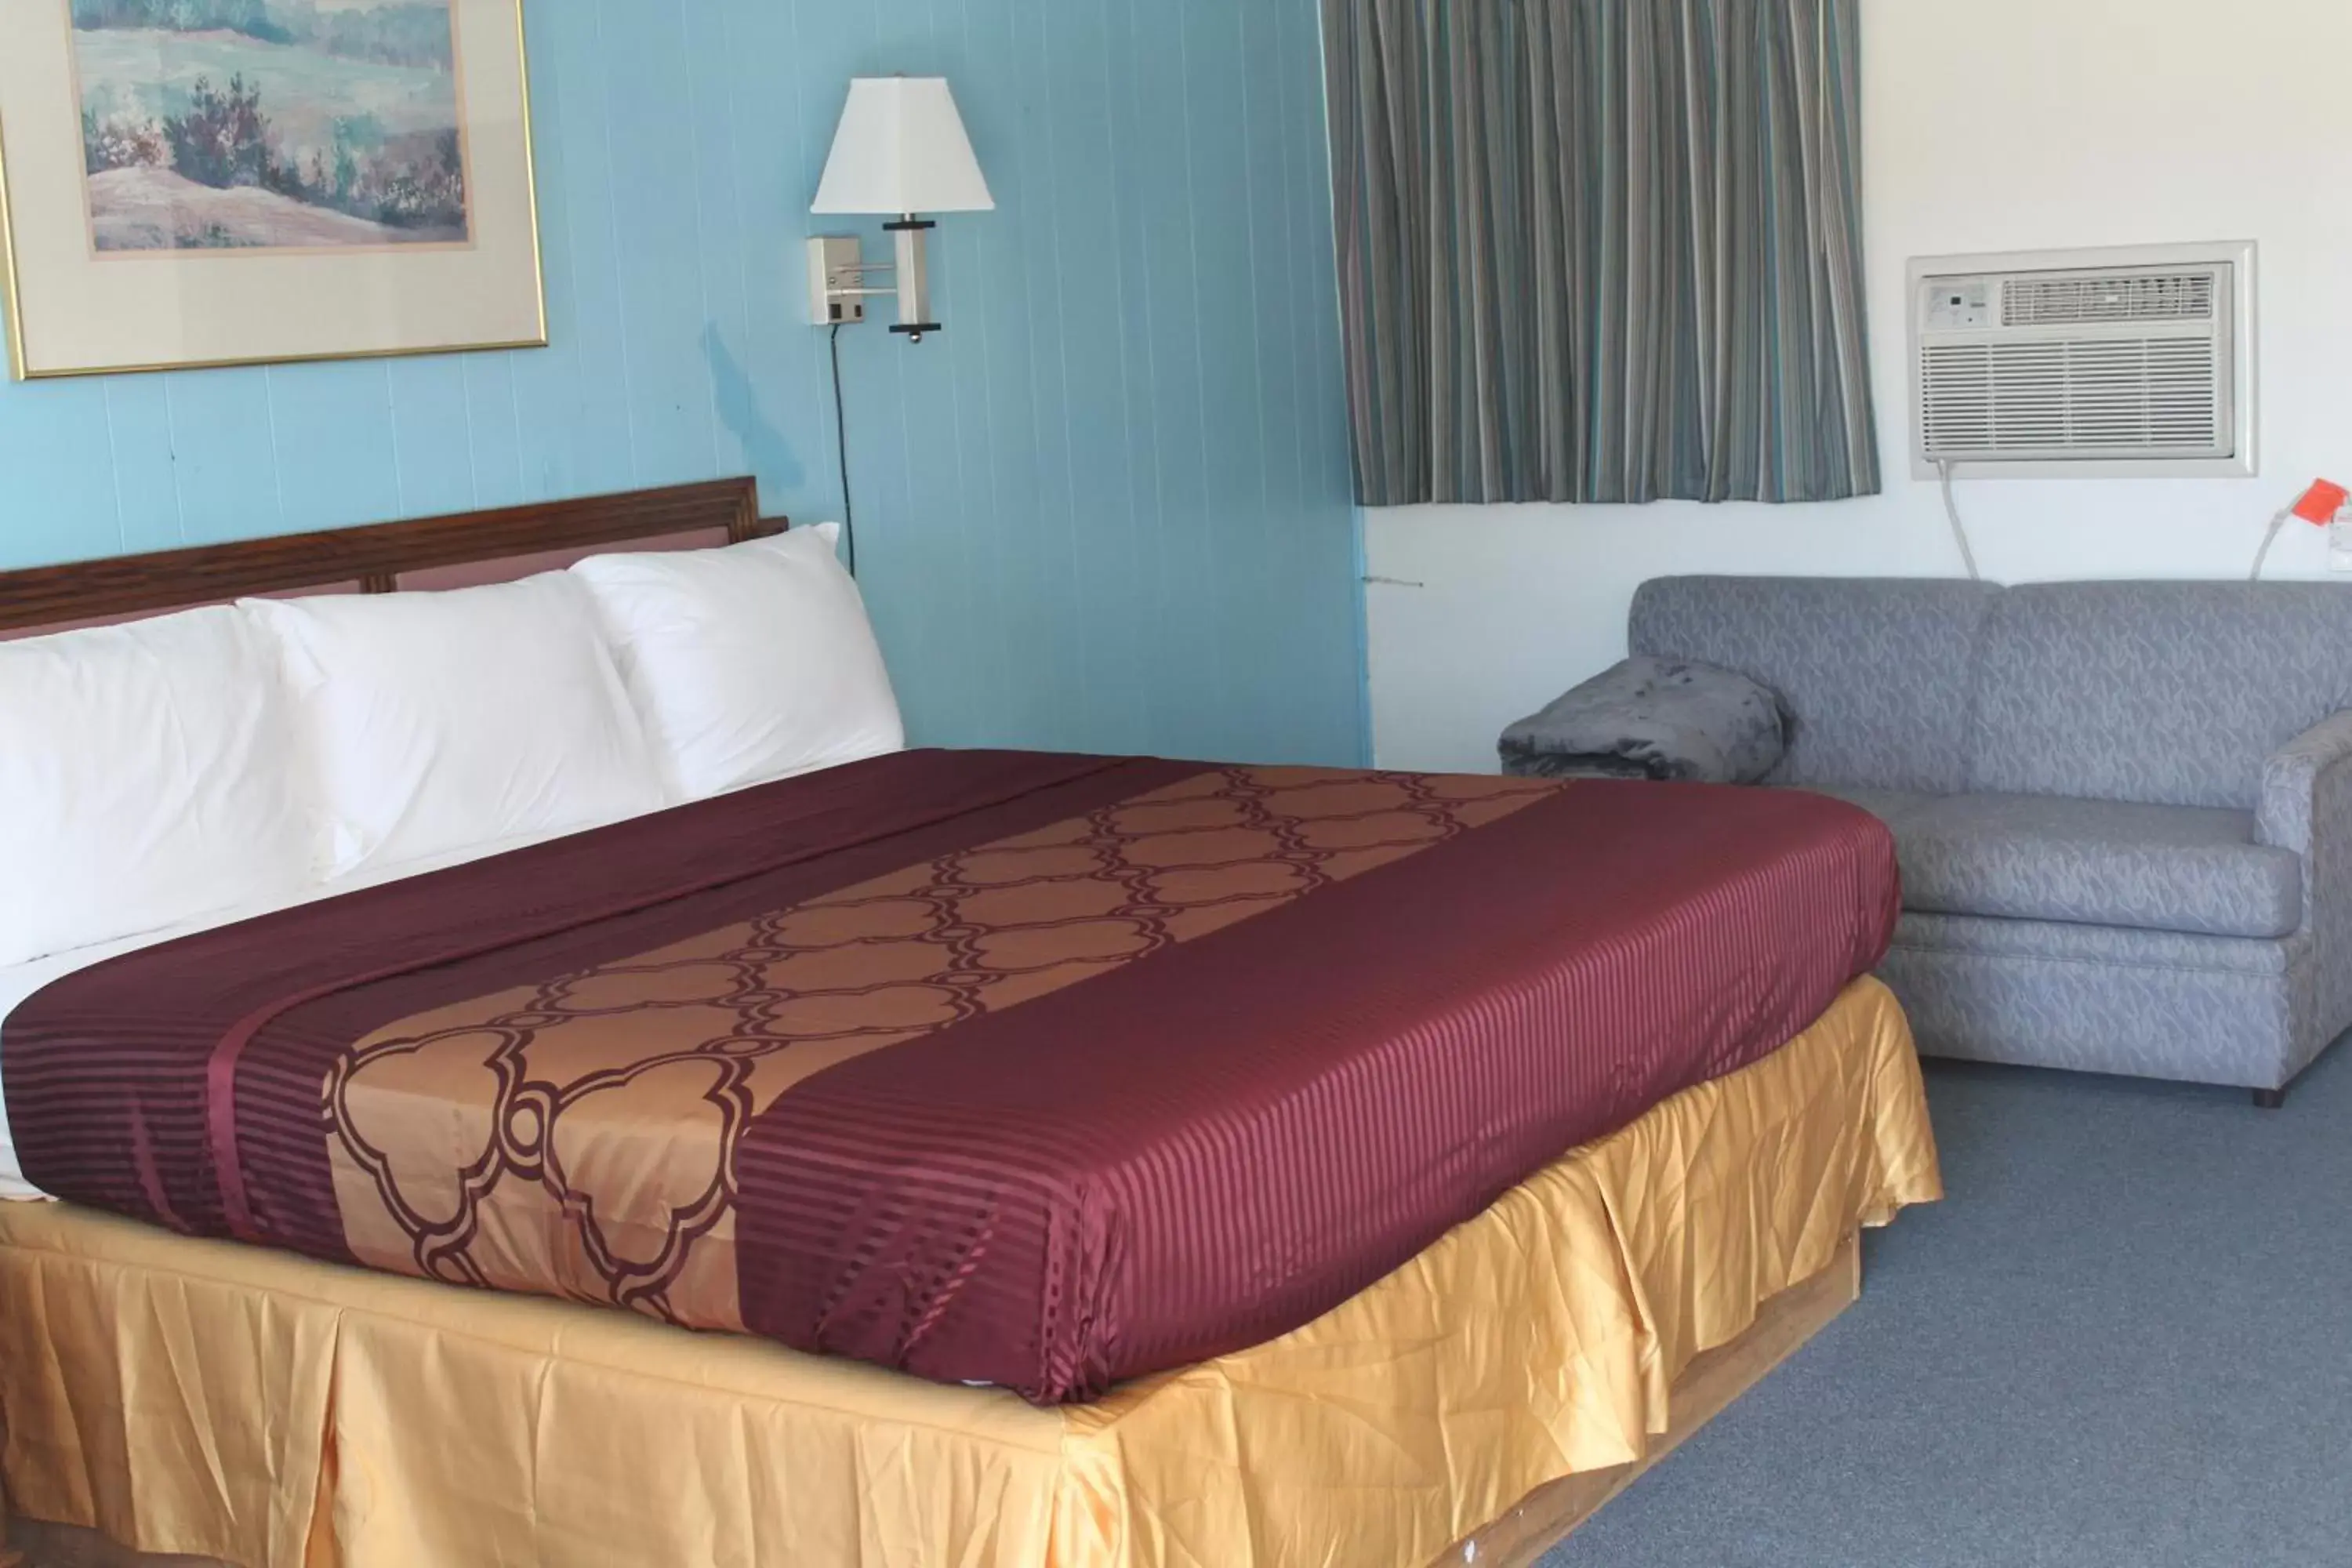 Bed in Royal Inn Motel